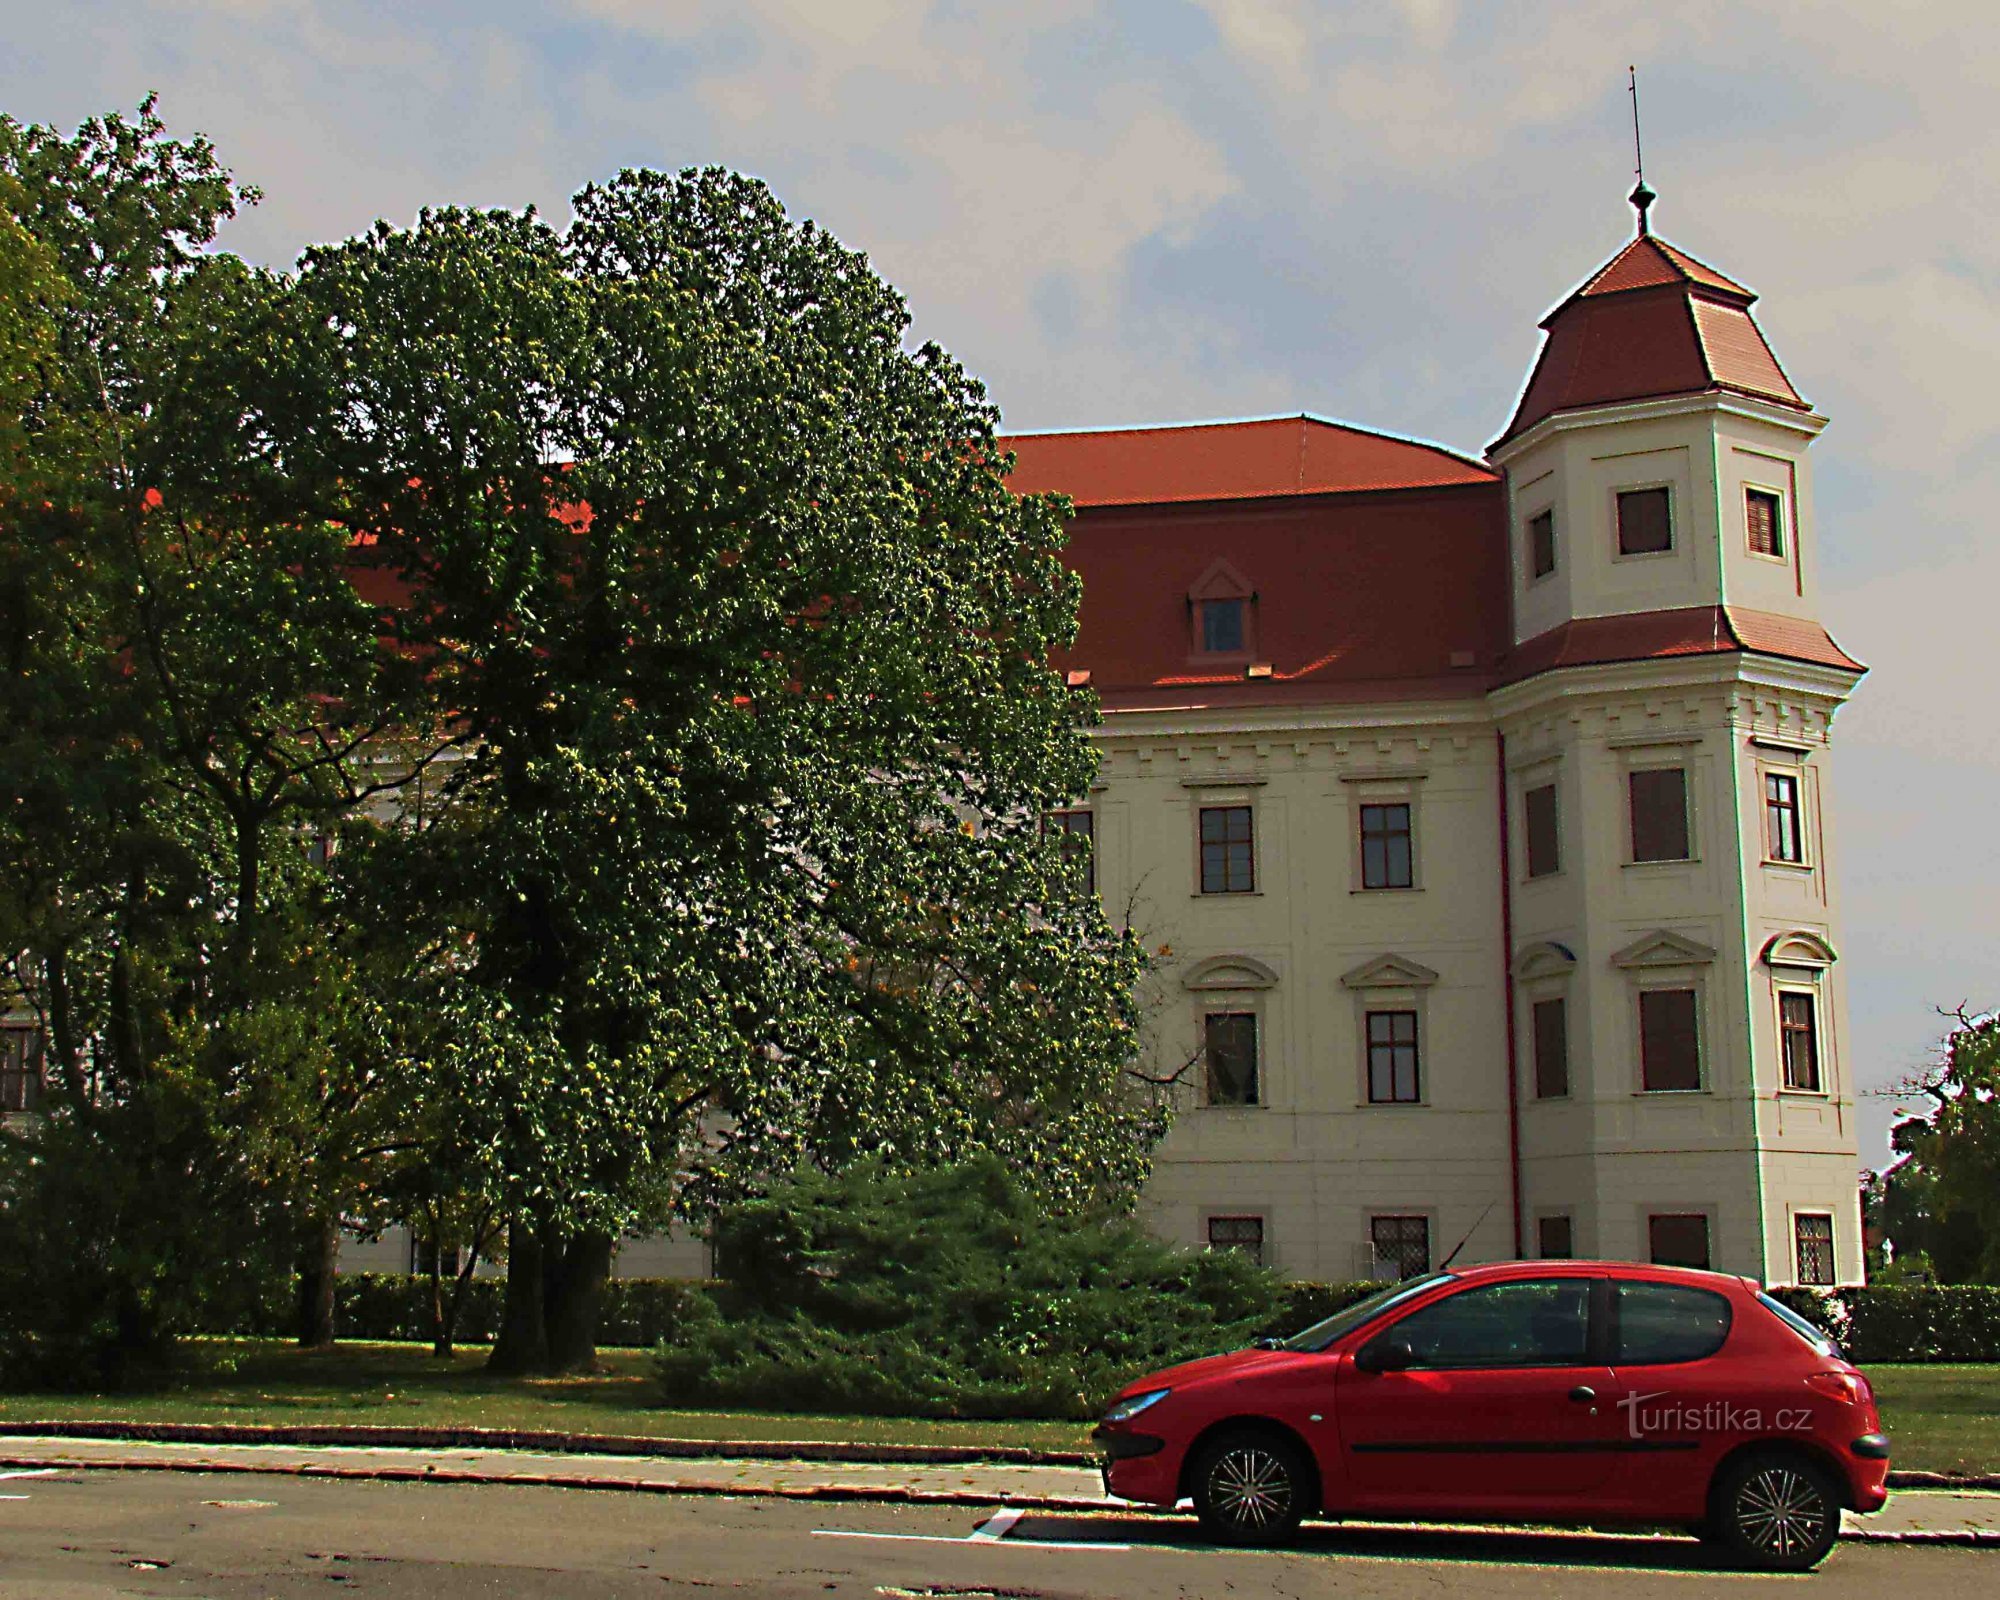 Ecocentro - Hájenka Skřítek en el parque del castillo Holešov